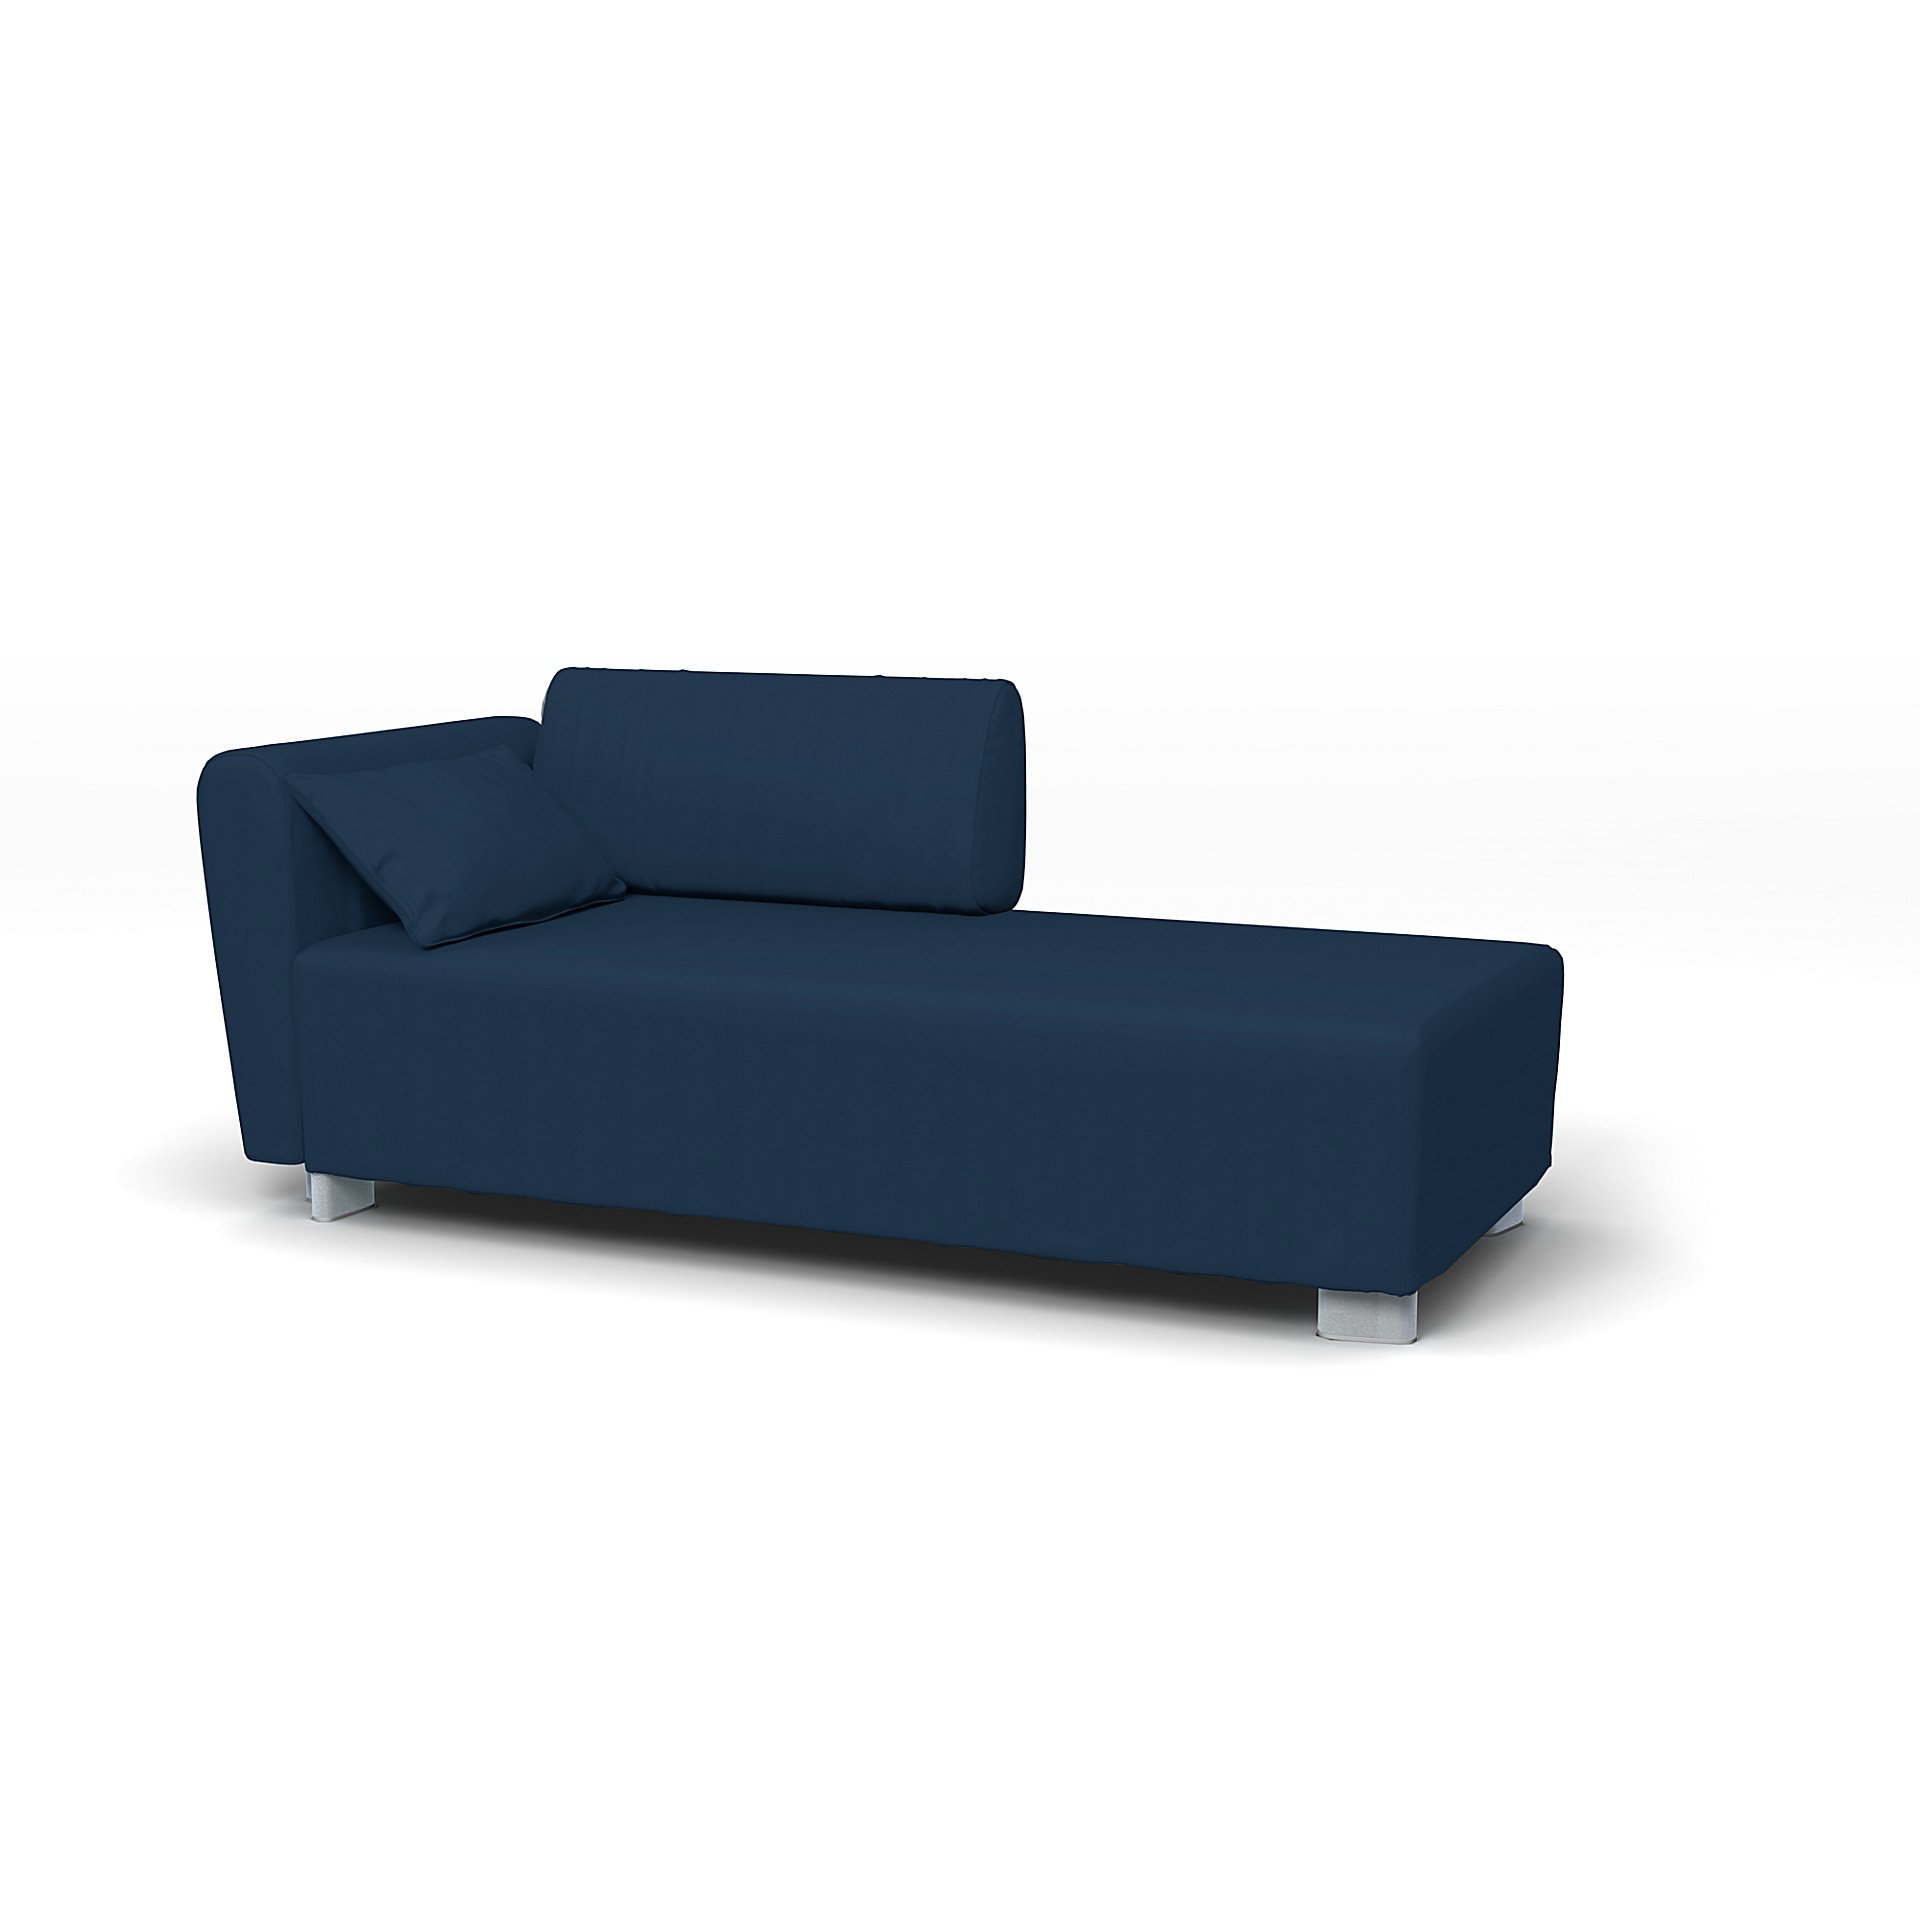 IKEA - Mysinge Chaise Longue with Armrest Cover, Deep Navy Blue, Cotton - Bemz